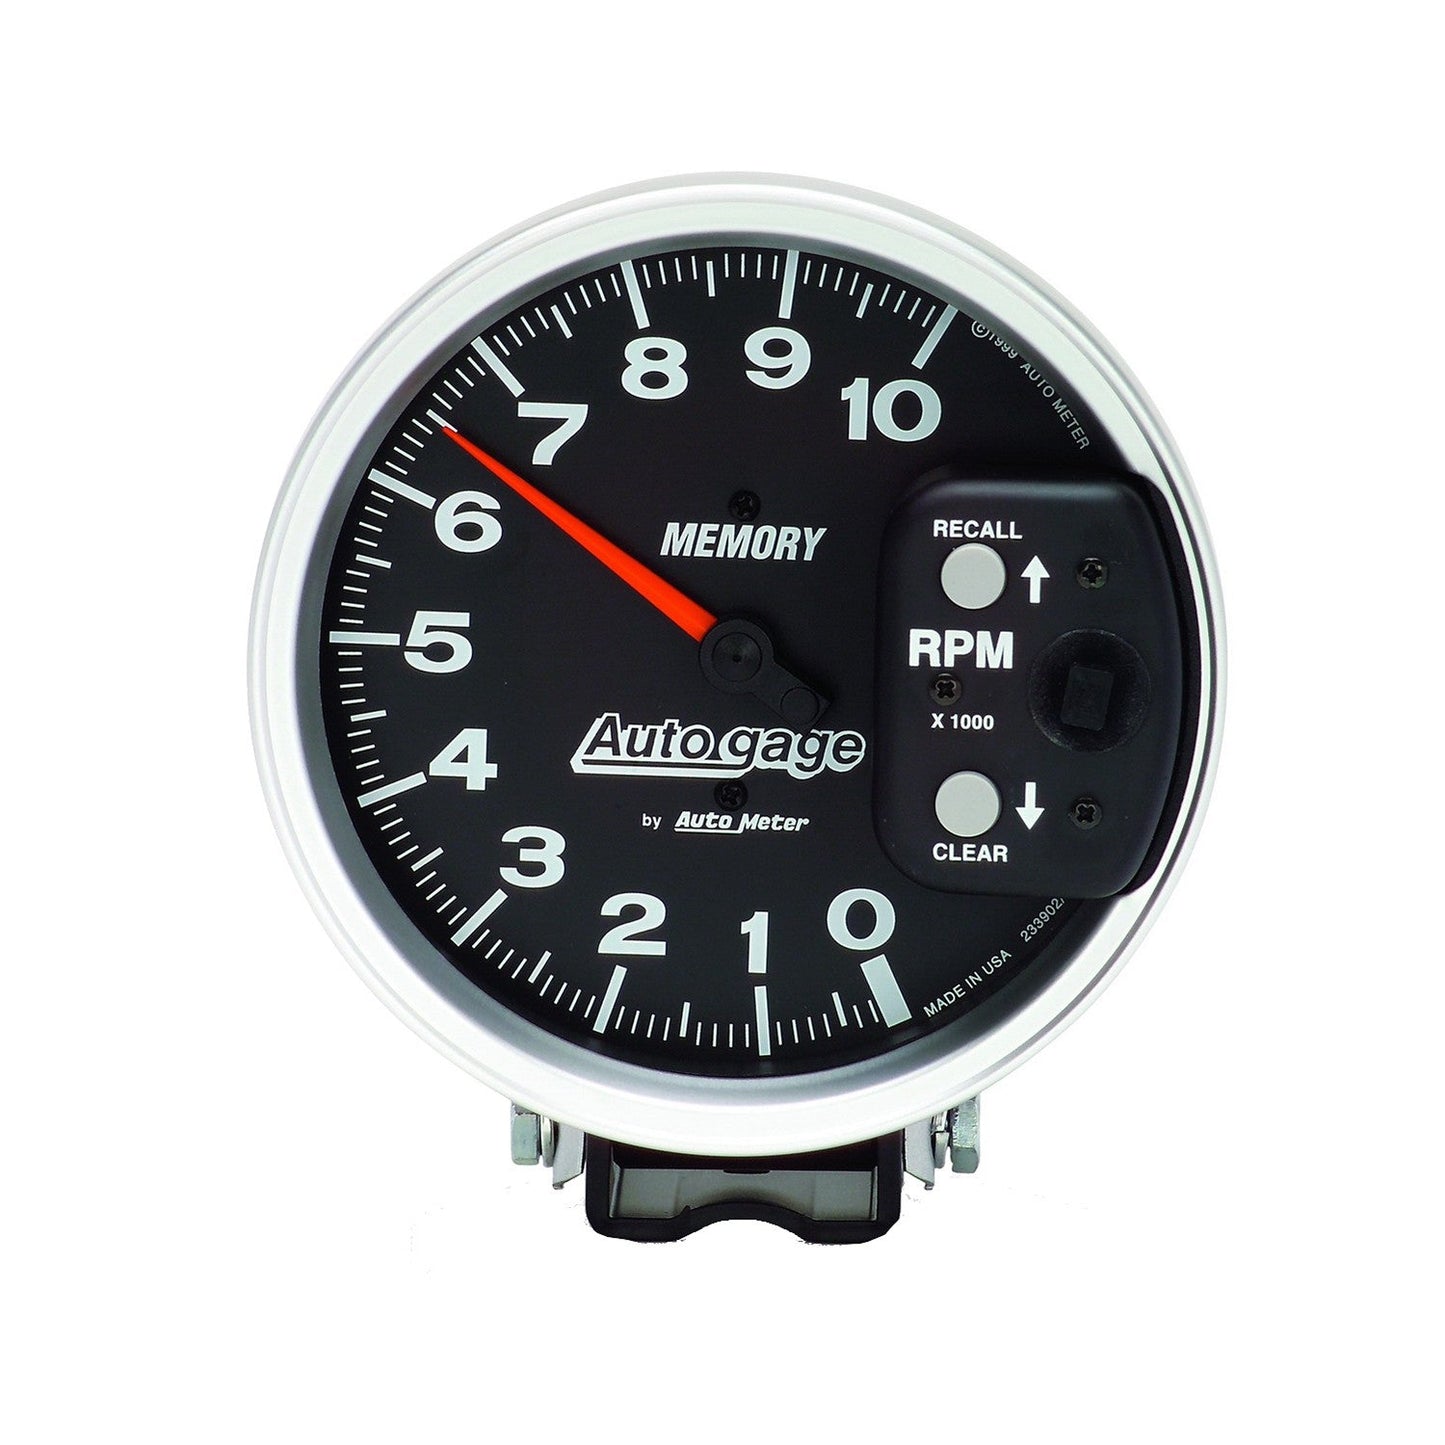 AutoMeter - 5" PEDESTAL TACHOMETER, 0-10,000 RPM, MEMORY, BLACK, AUTO GAGE (233902)